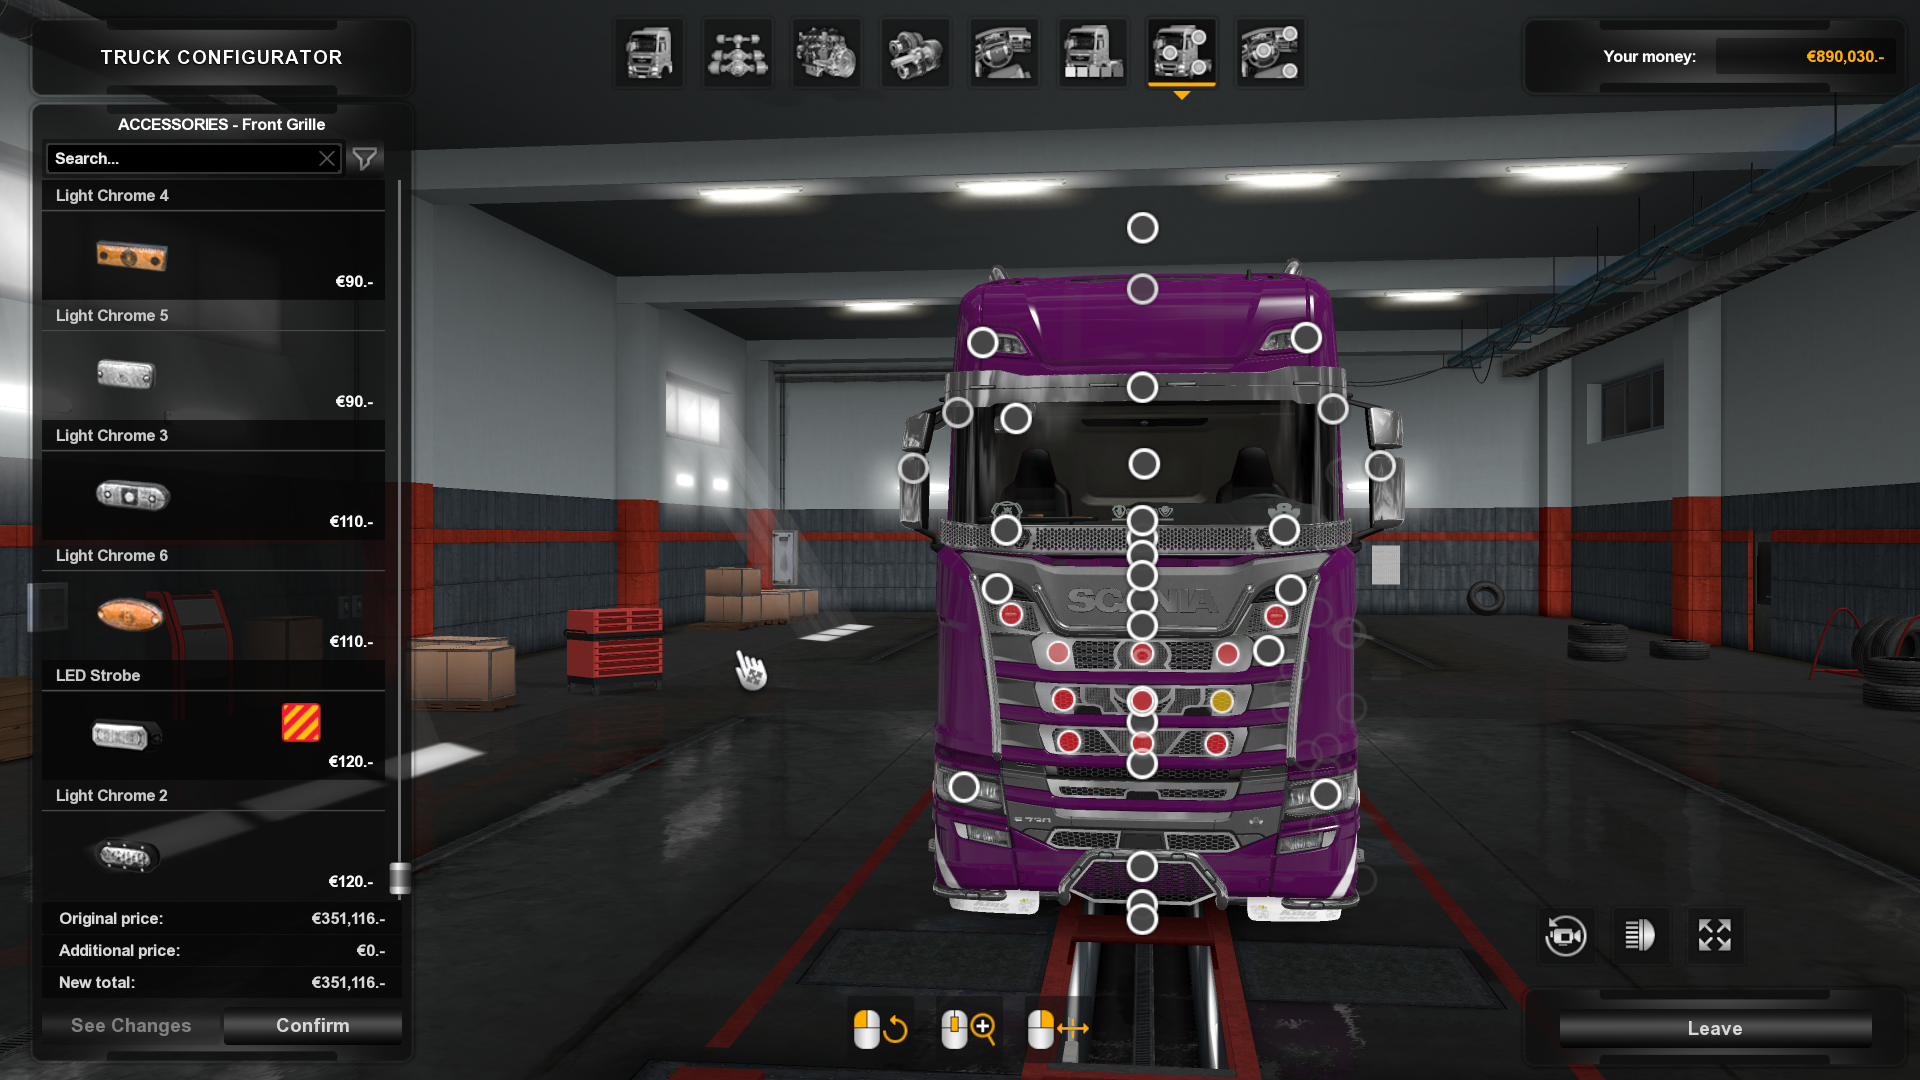 Euro Truck Simulator 2 Italia